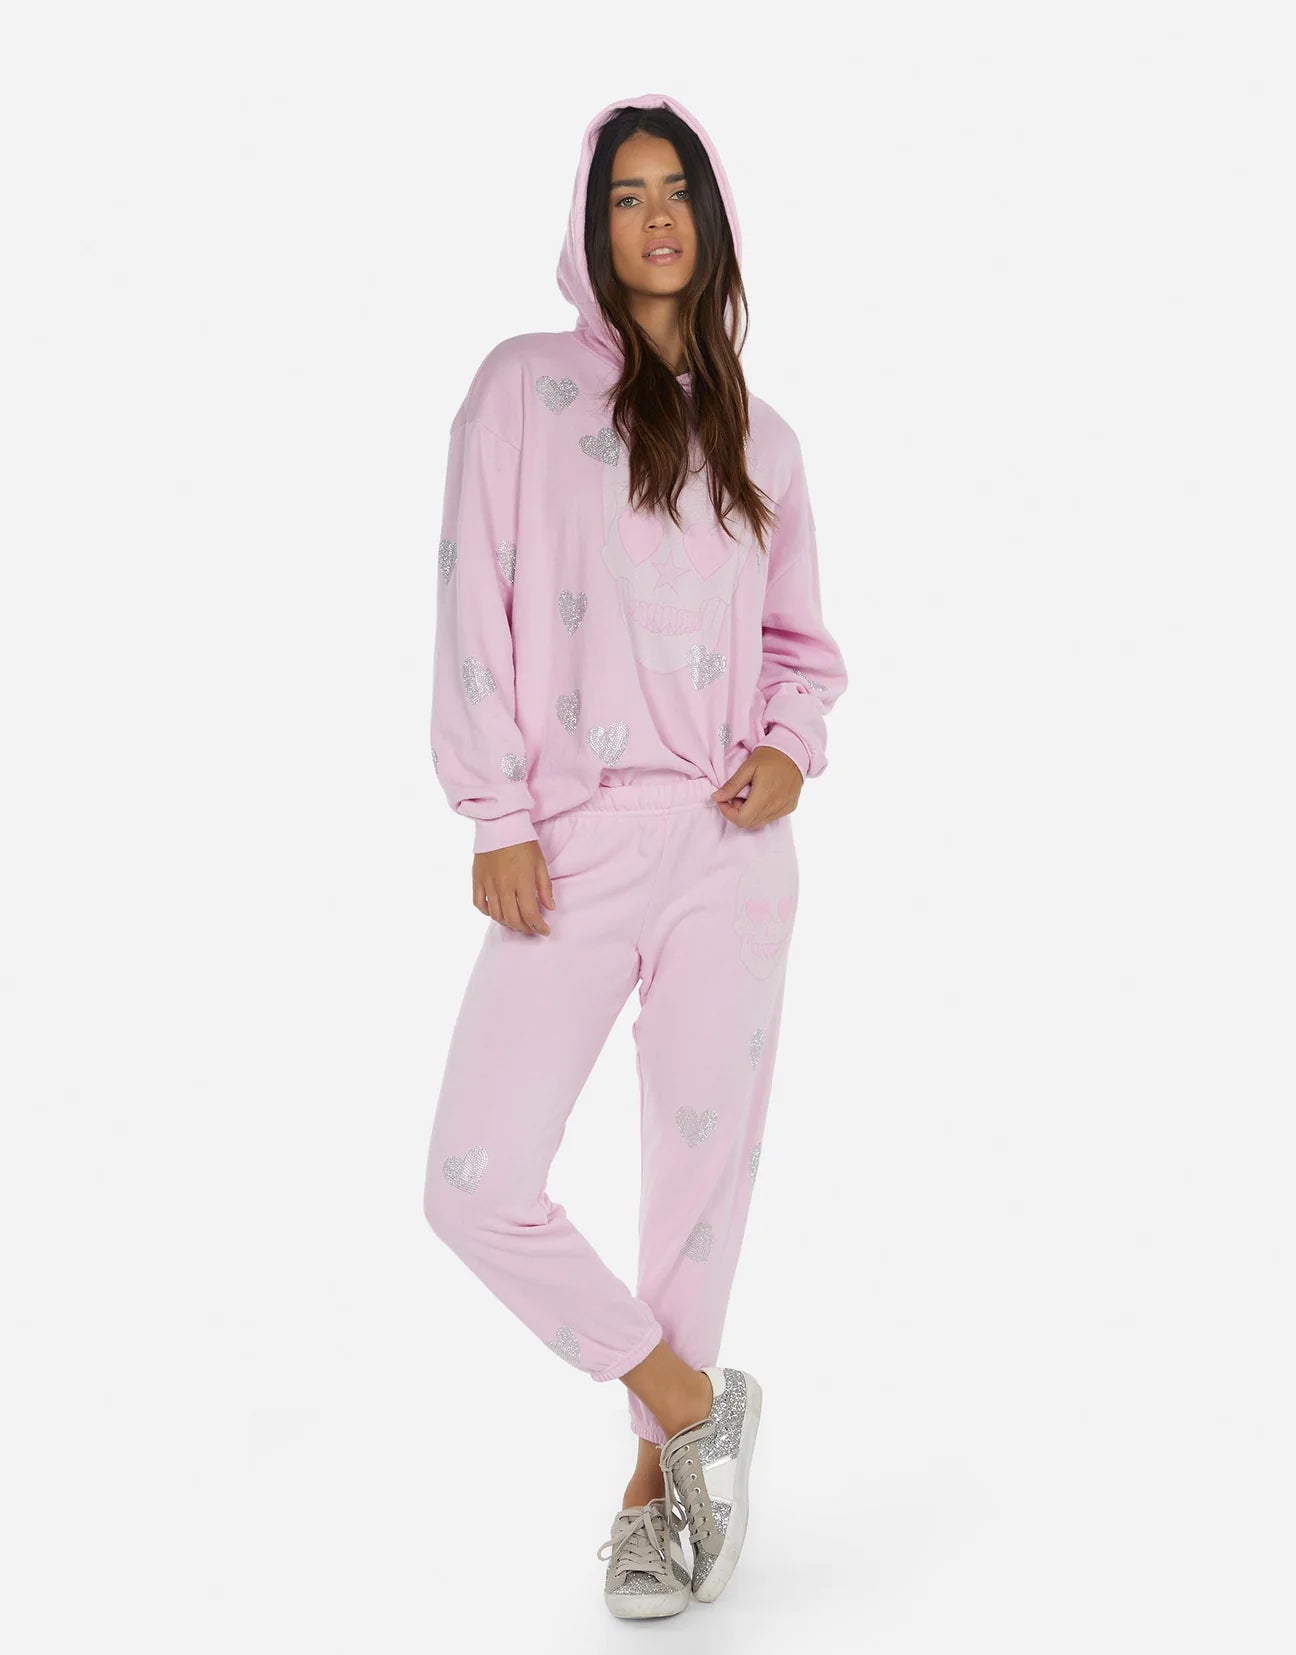 Shop Lauren Moshi Alana Crystal Pink Peace Love Skull Sweatpants - Premium Joggers from Lauren Moshi Online now at Spoiled Brat 